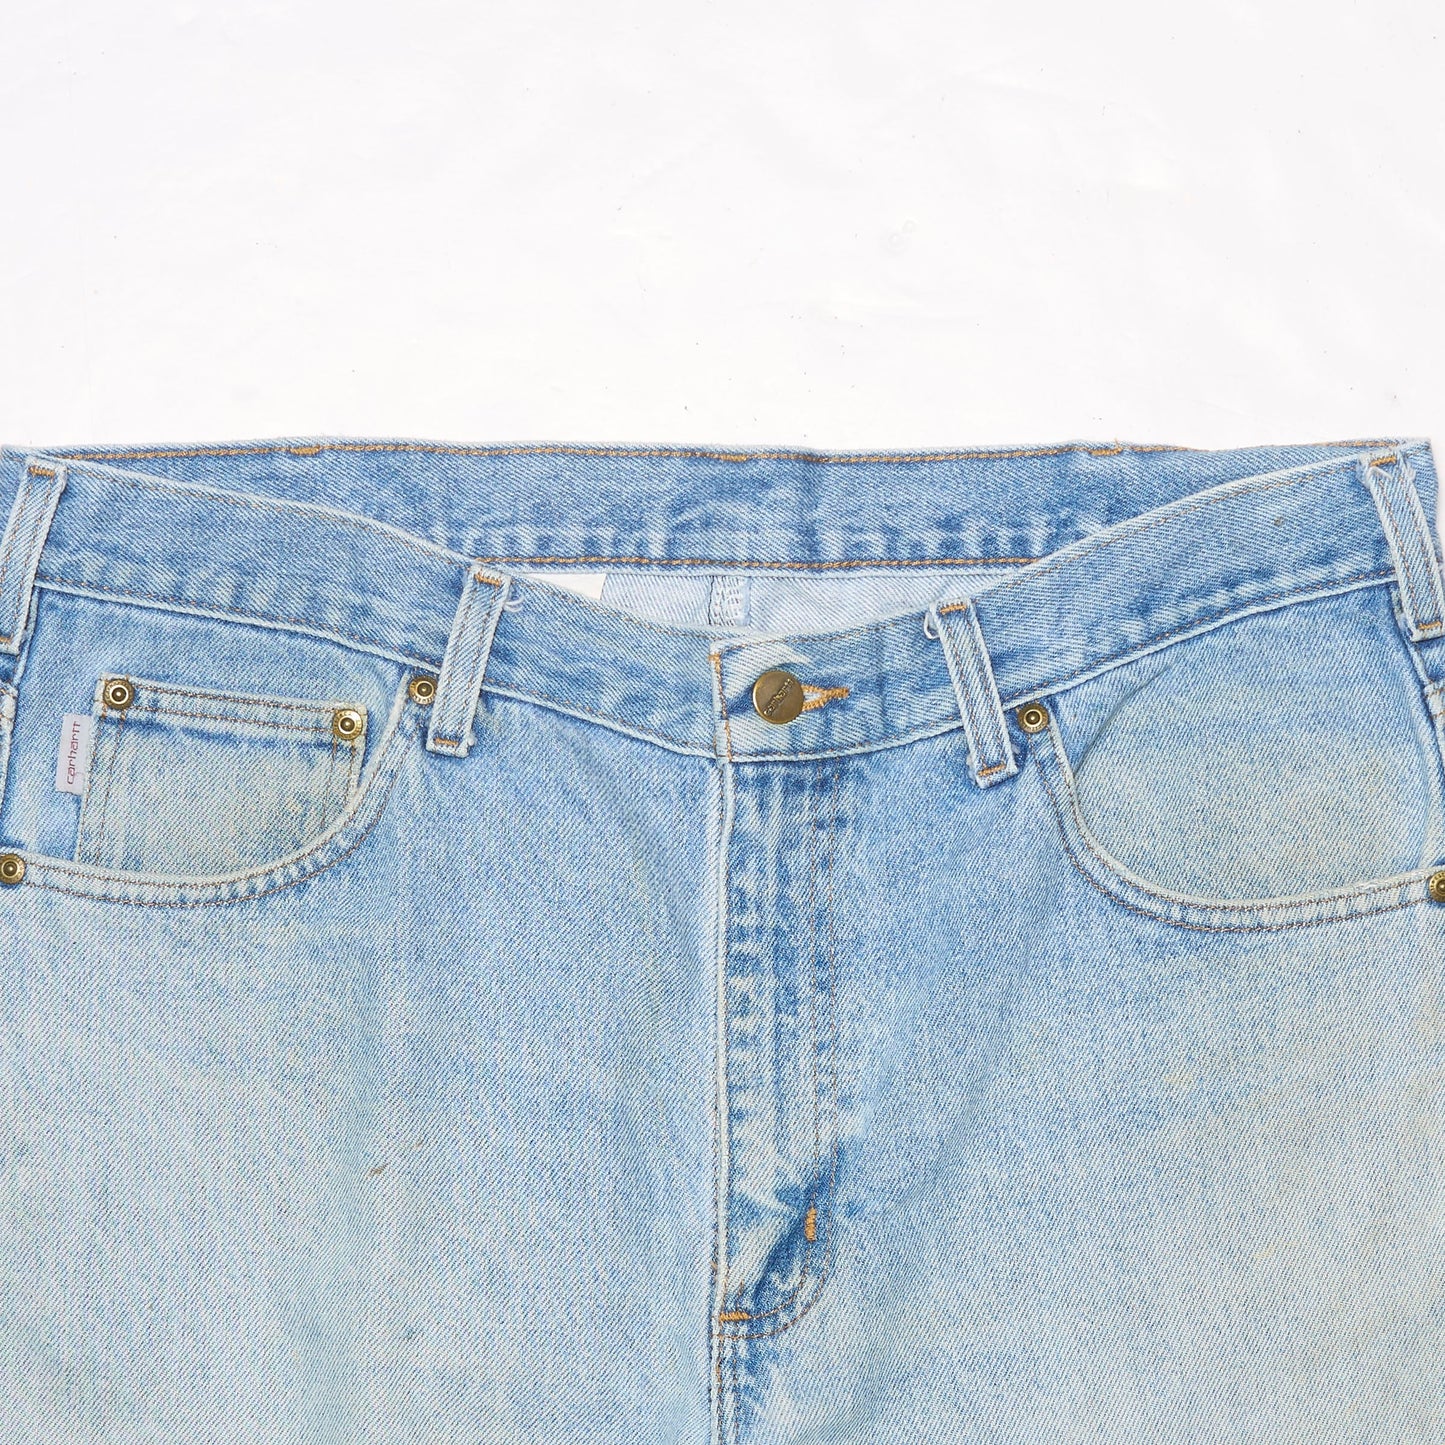 Carhartt Washed Wide Leg Jeans - W36" L30"